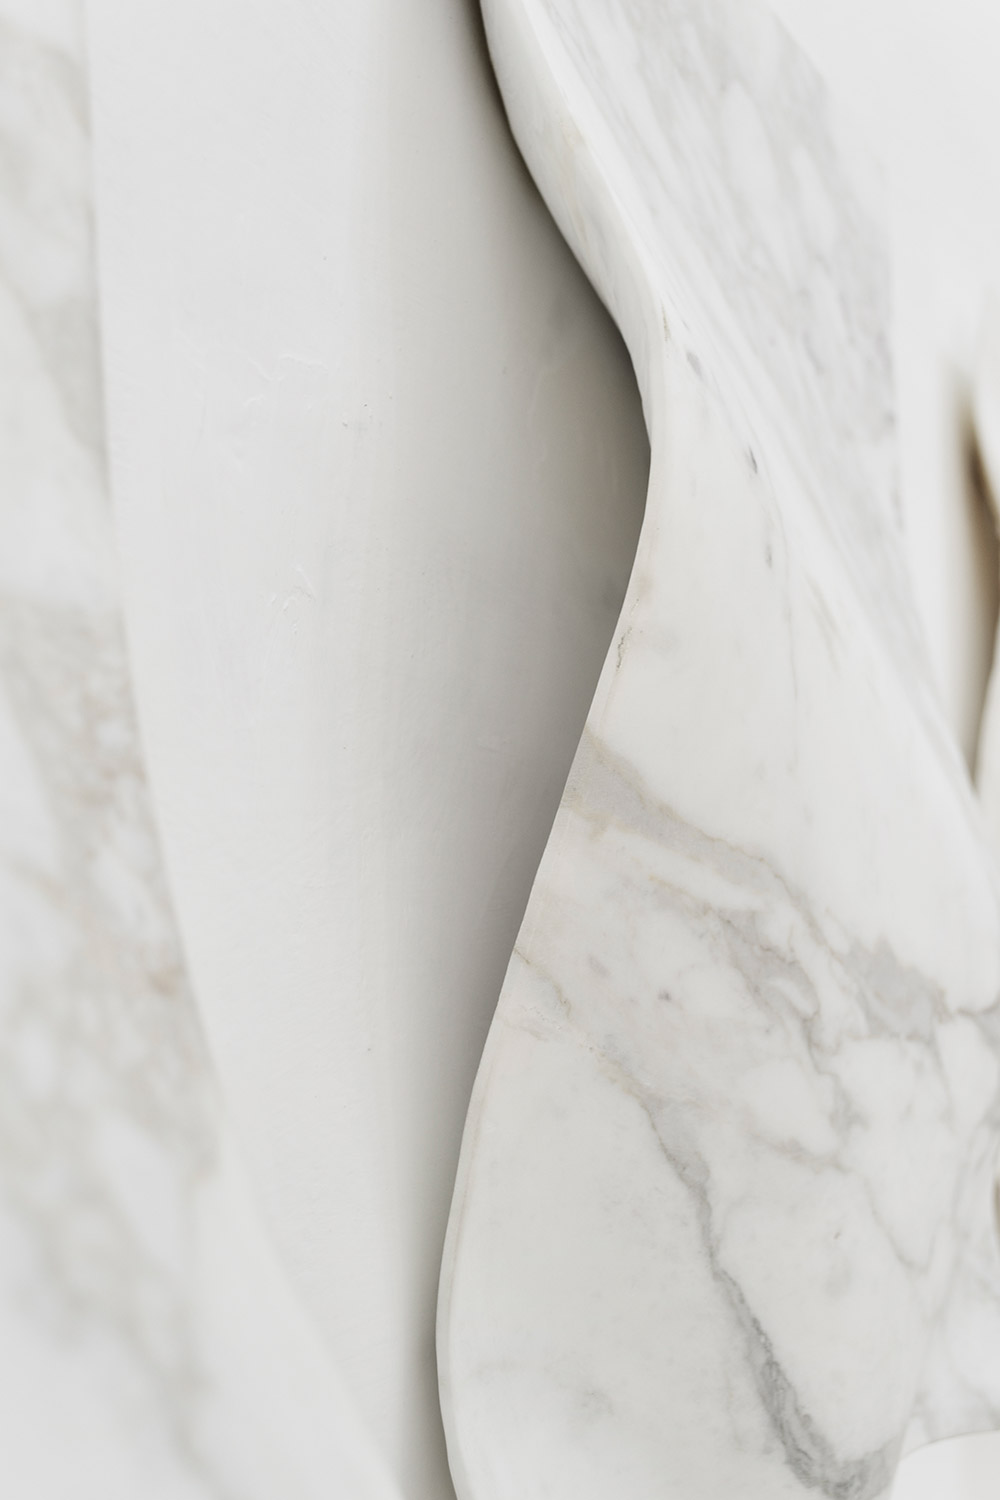 Antonio Trotta, Sospiri, 1999-2002, marble, 37x46x8 cm each (detail)